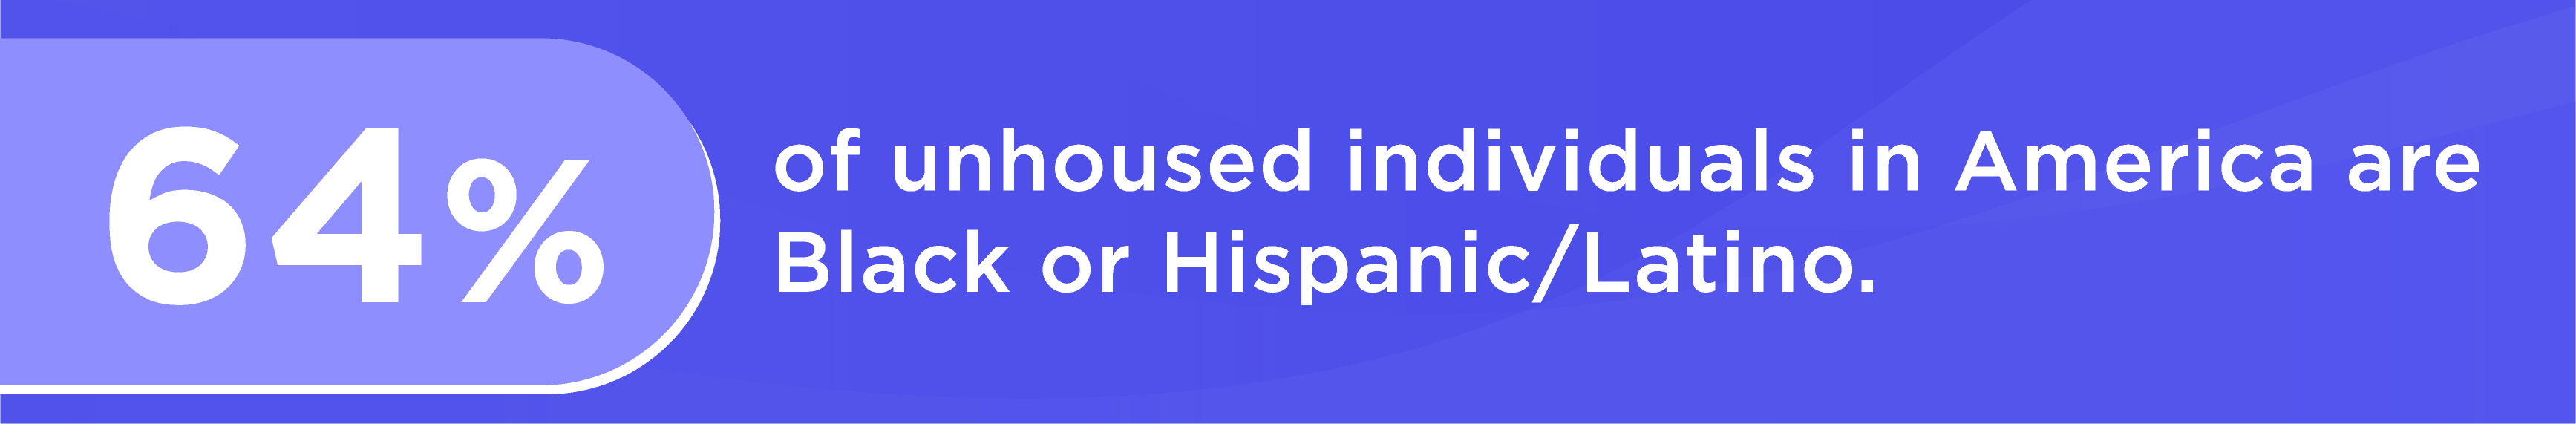 64 percent of unhoused individuals in America are Black or Hispanic